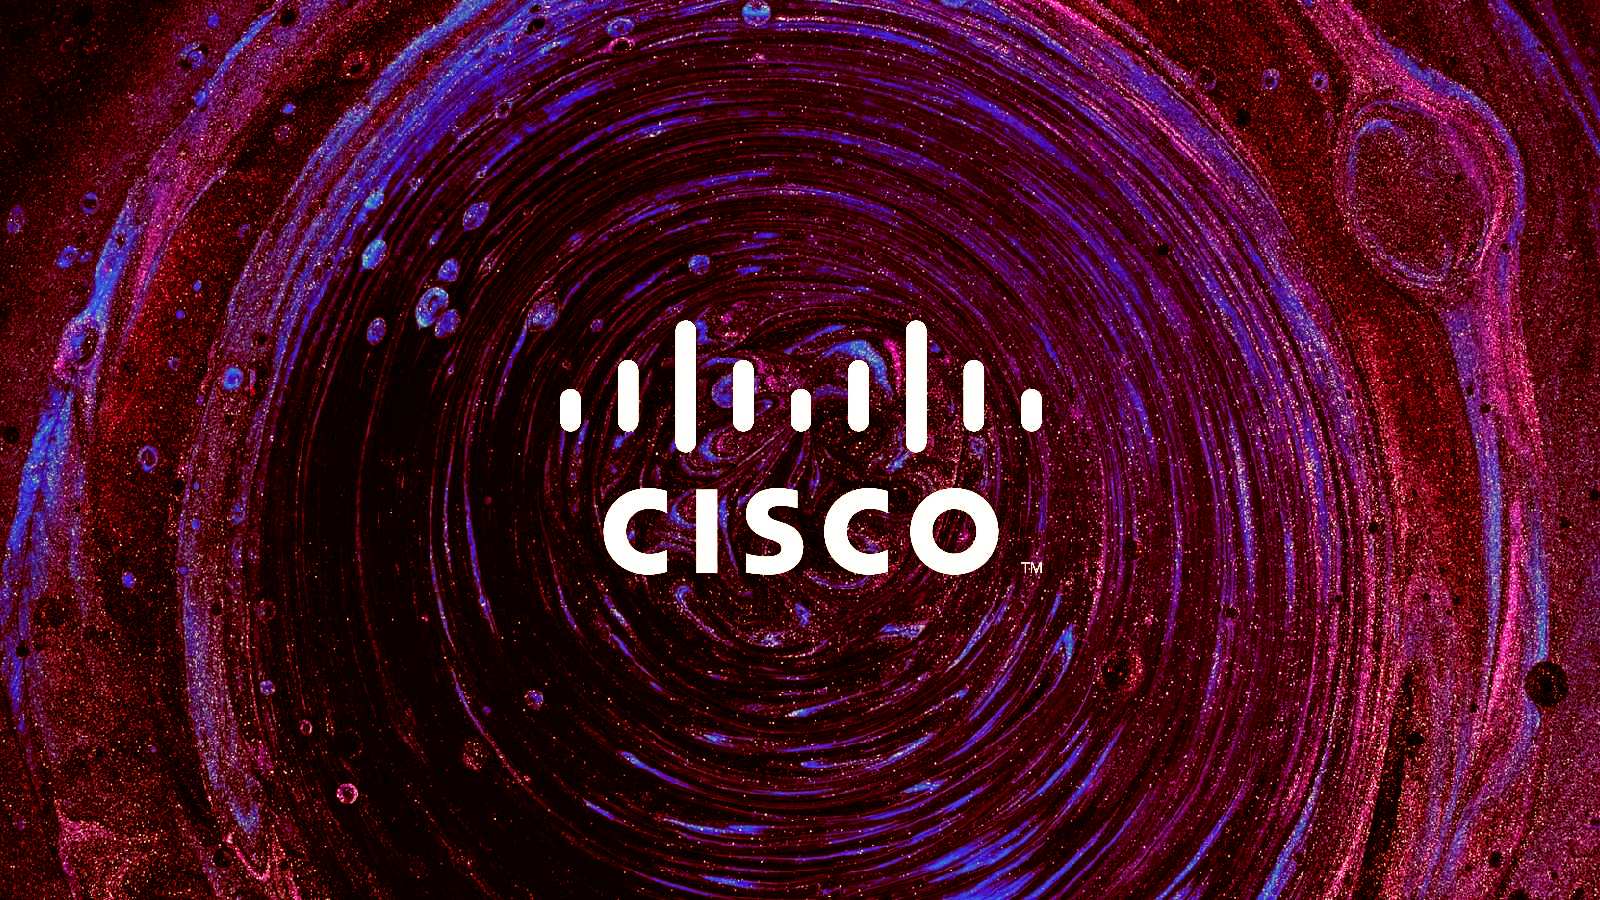 Cisco_headpic.jpg